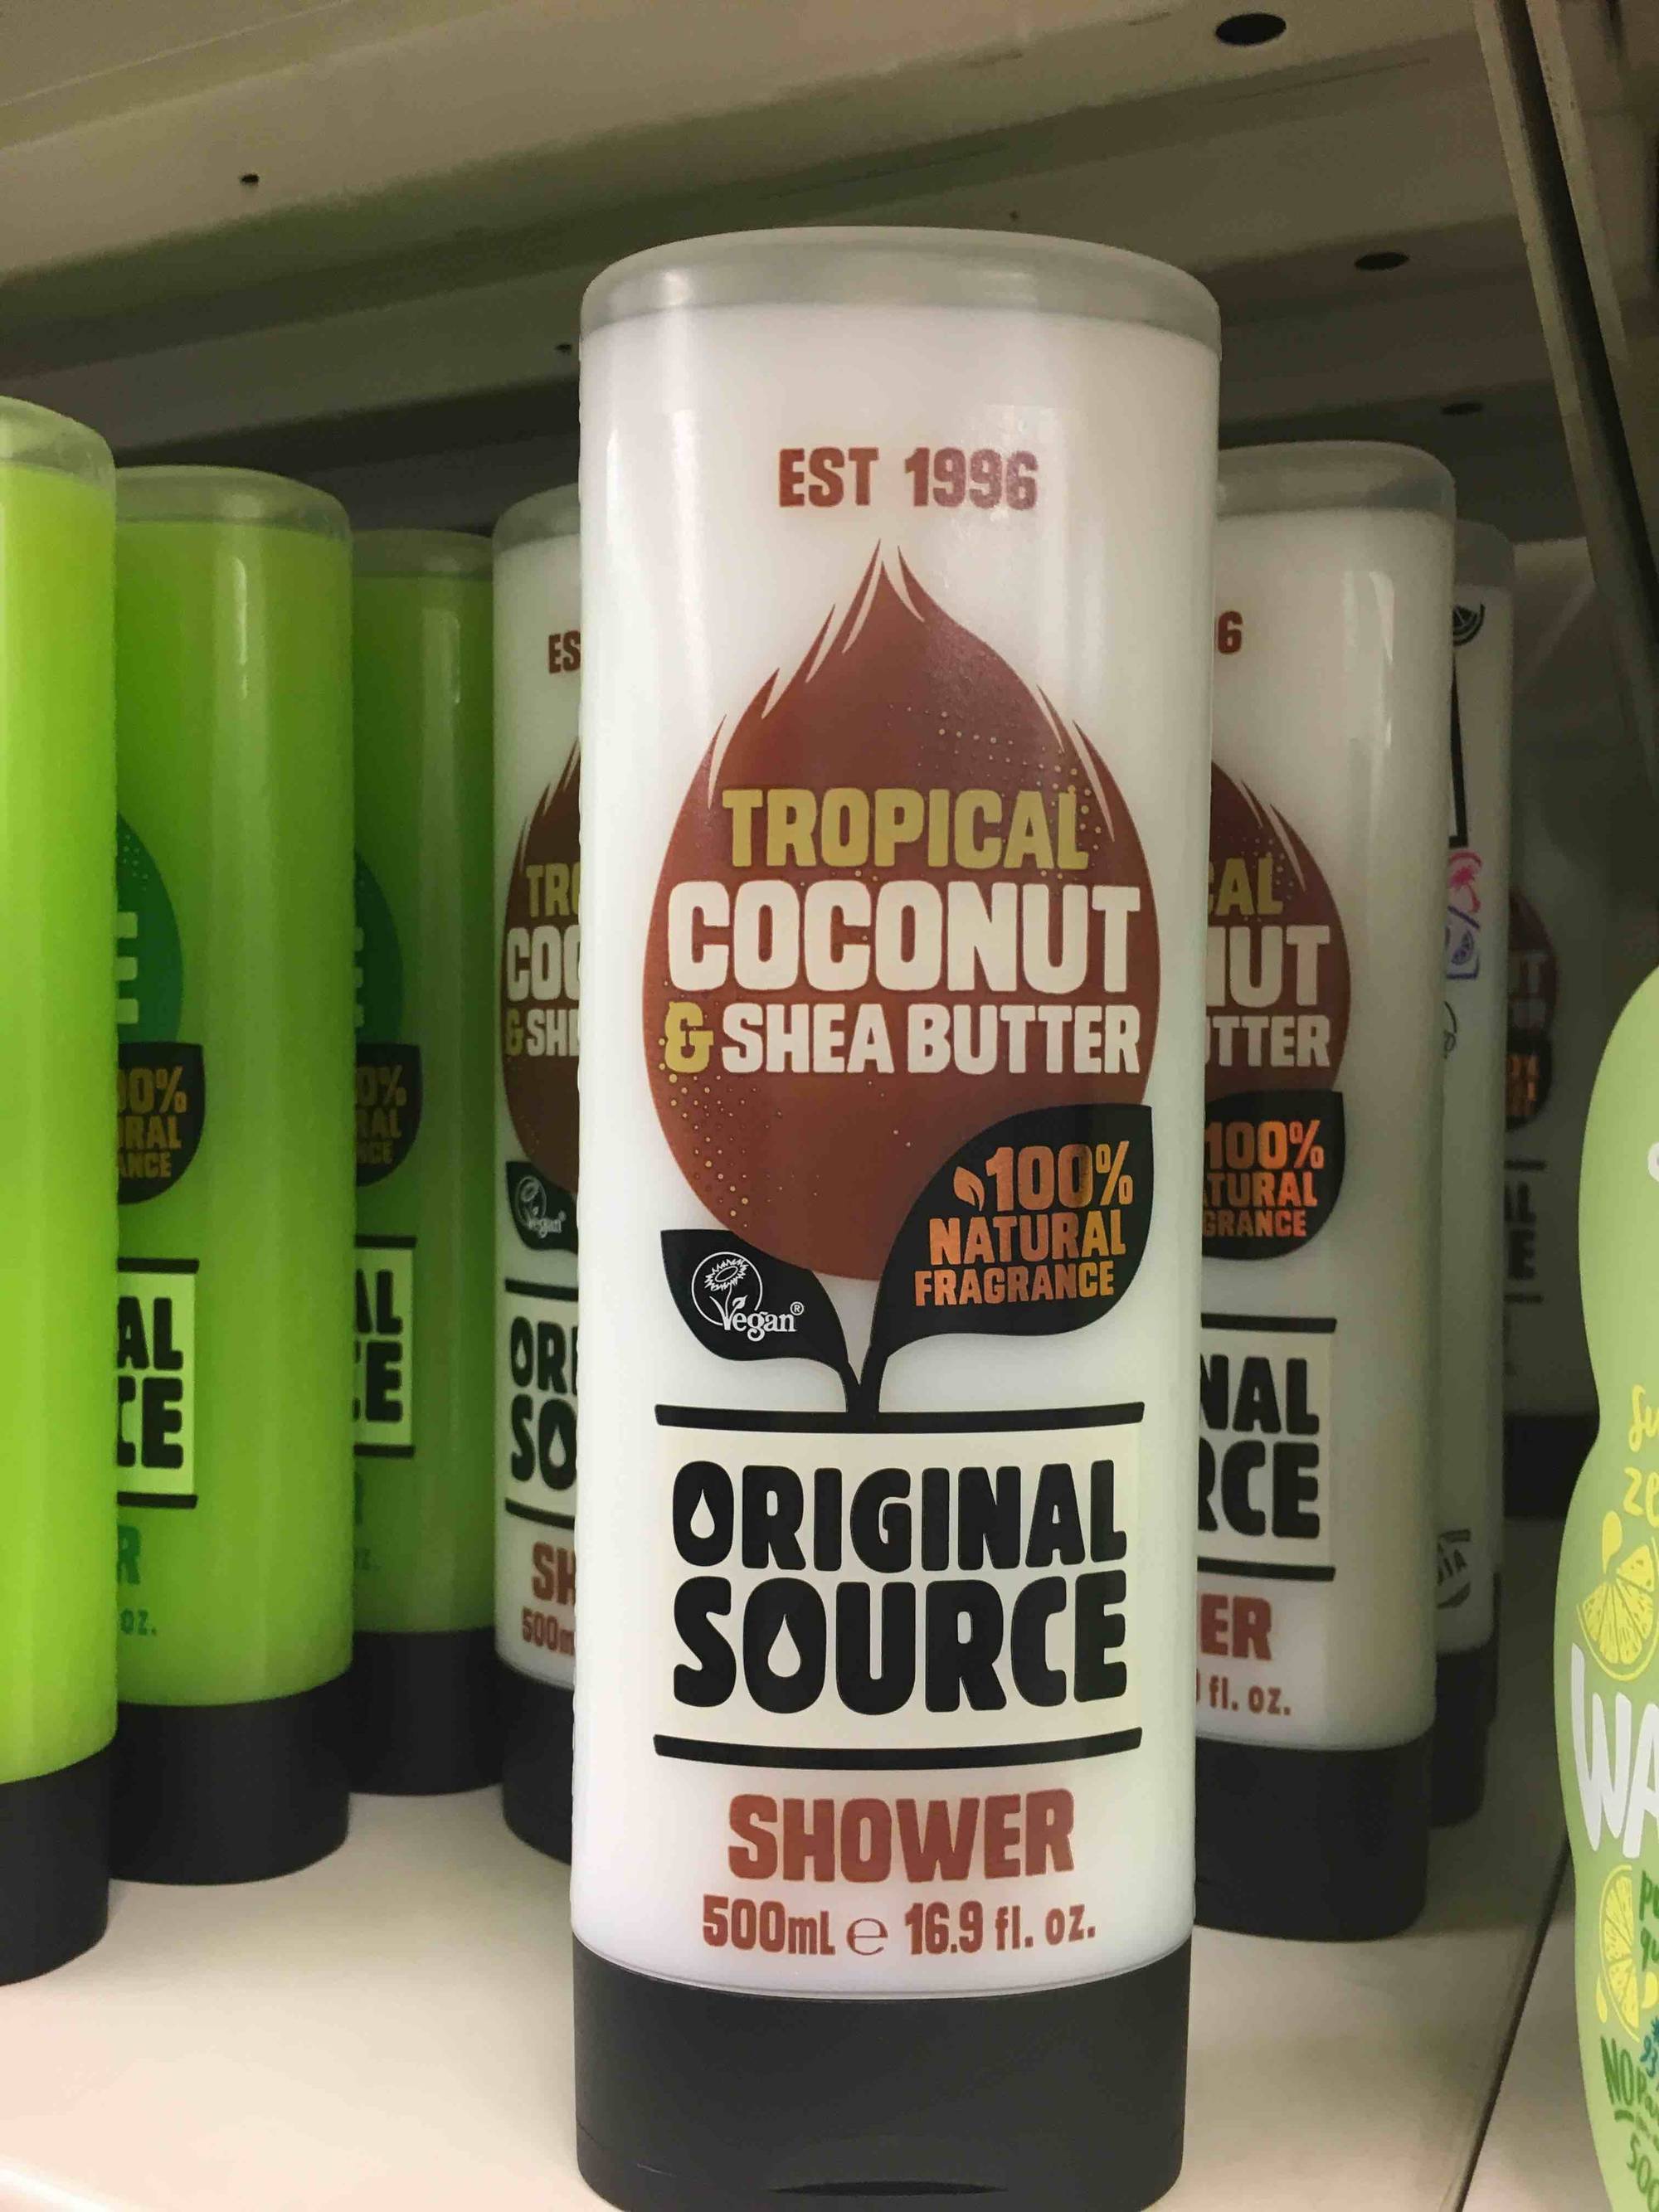 ORIGINAL SOURCE - Tropical coconut & shea butter - Shower